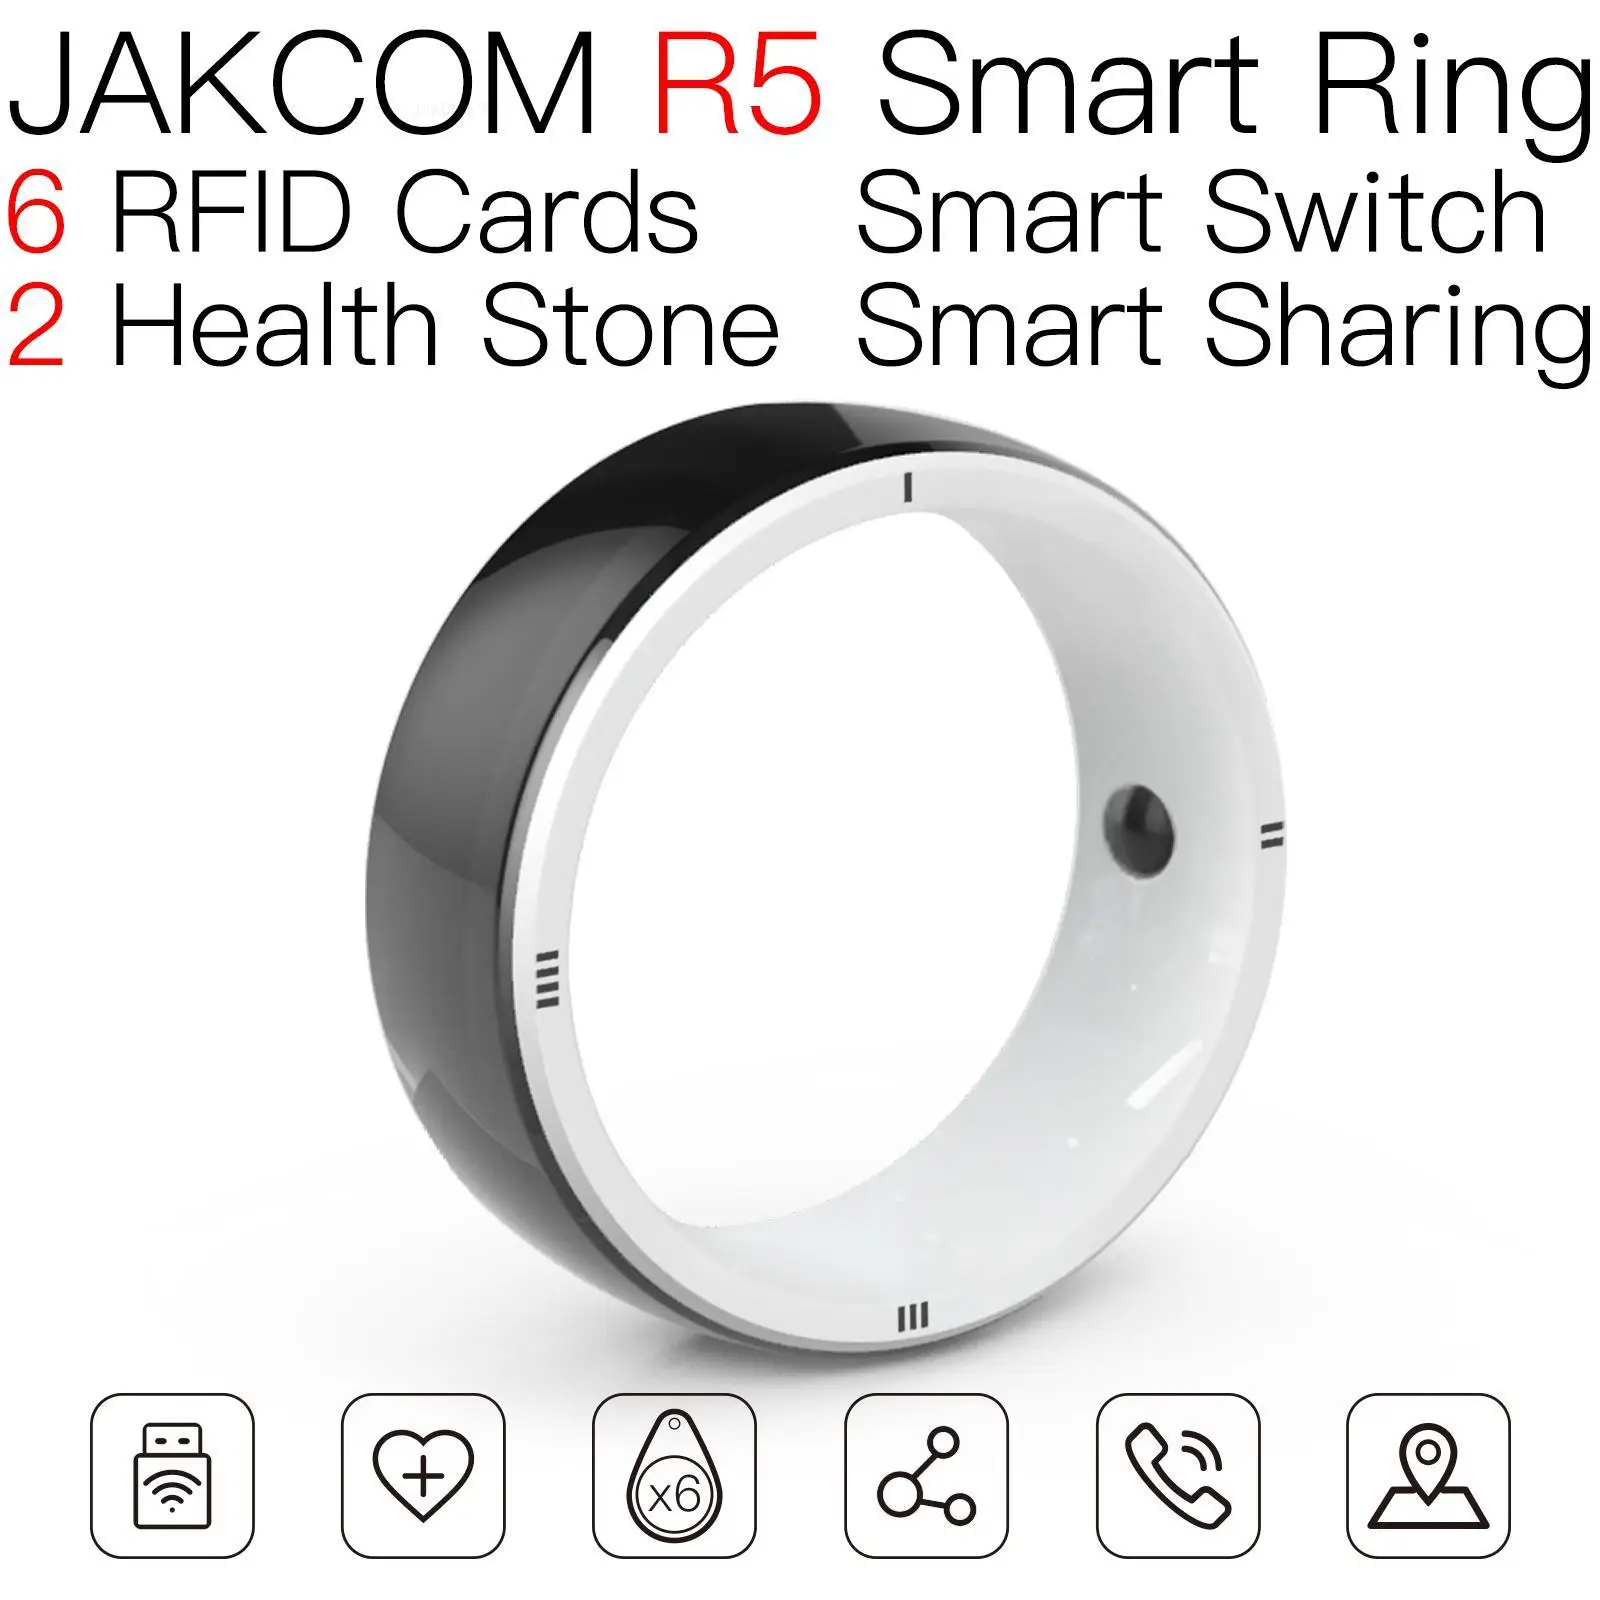 

JAKCOM R5 Smart Ring Newer than iot rfid 125 ring uhf tags nfc tag keychain smart race sticker coil block 0 rewritable lots 200